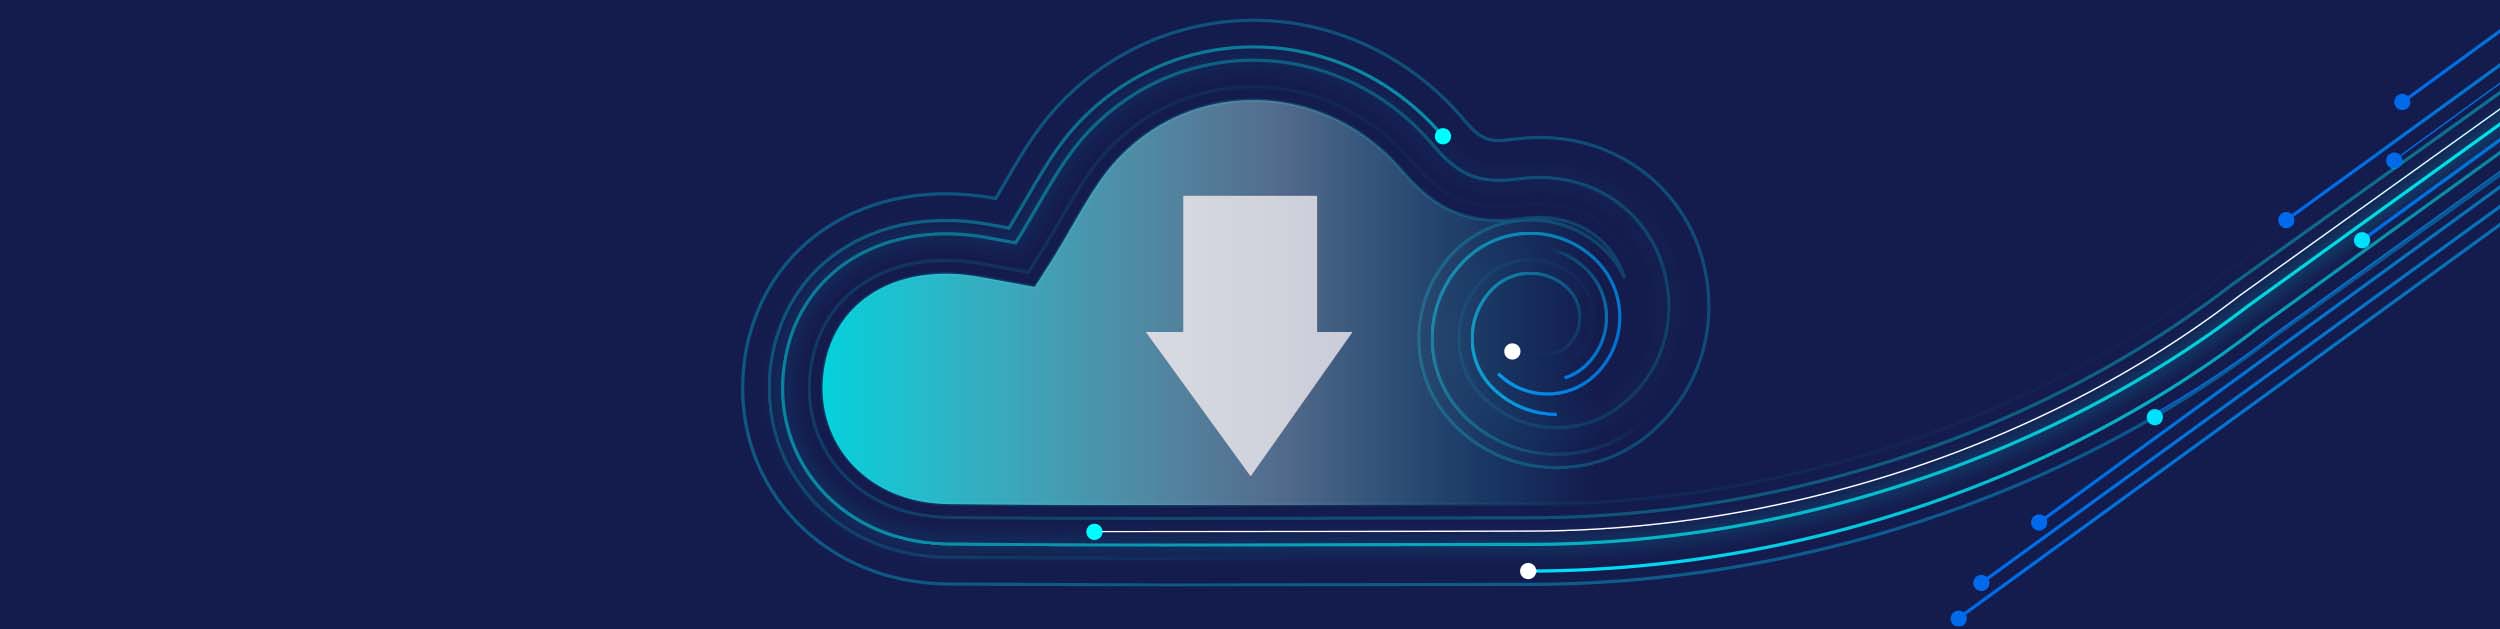 BlueCrest Download cloud illustration